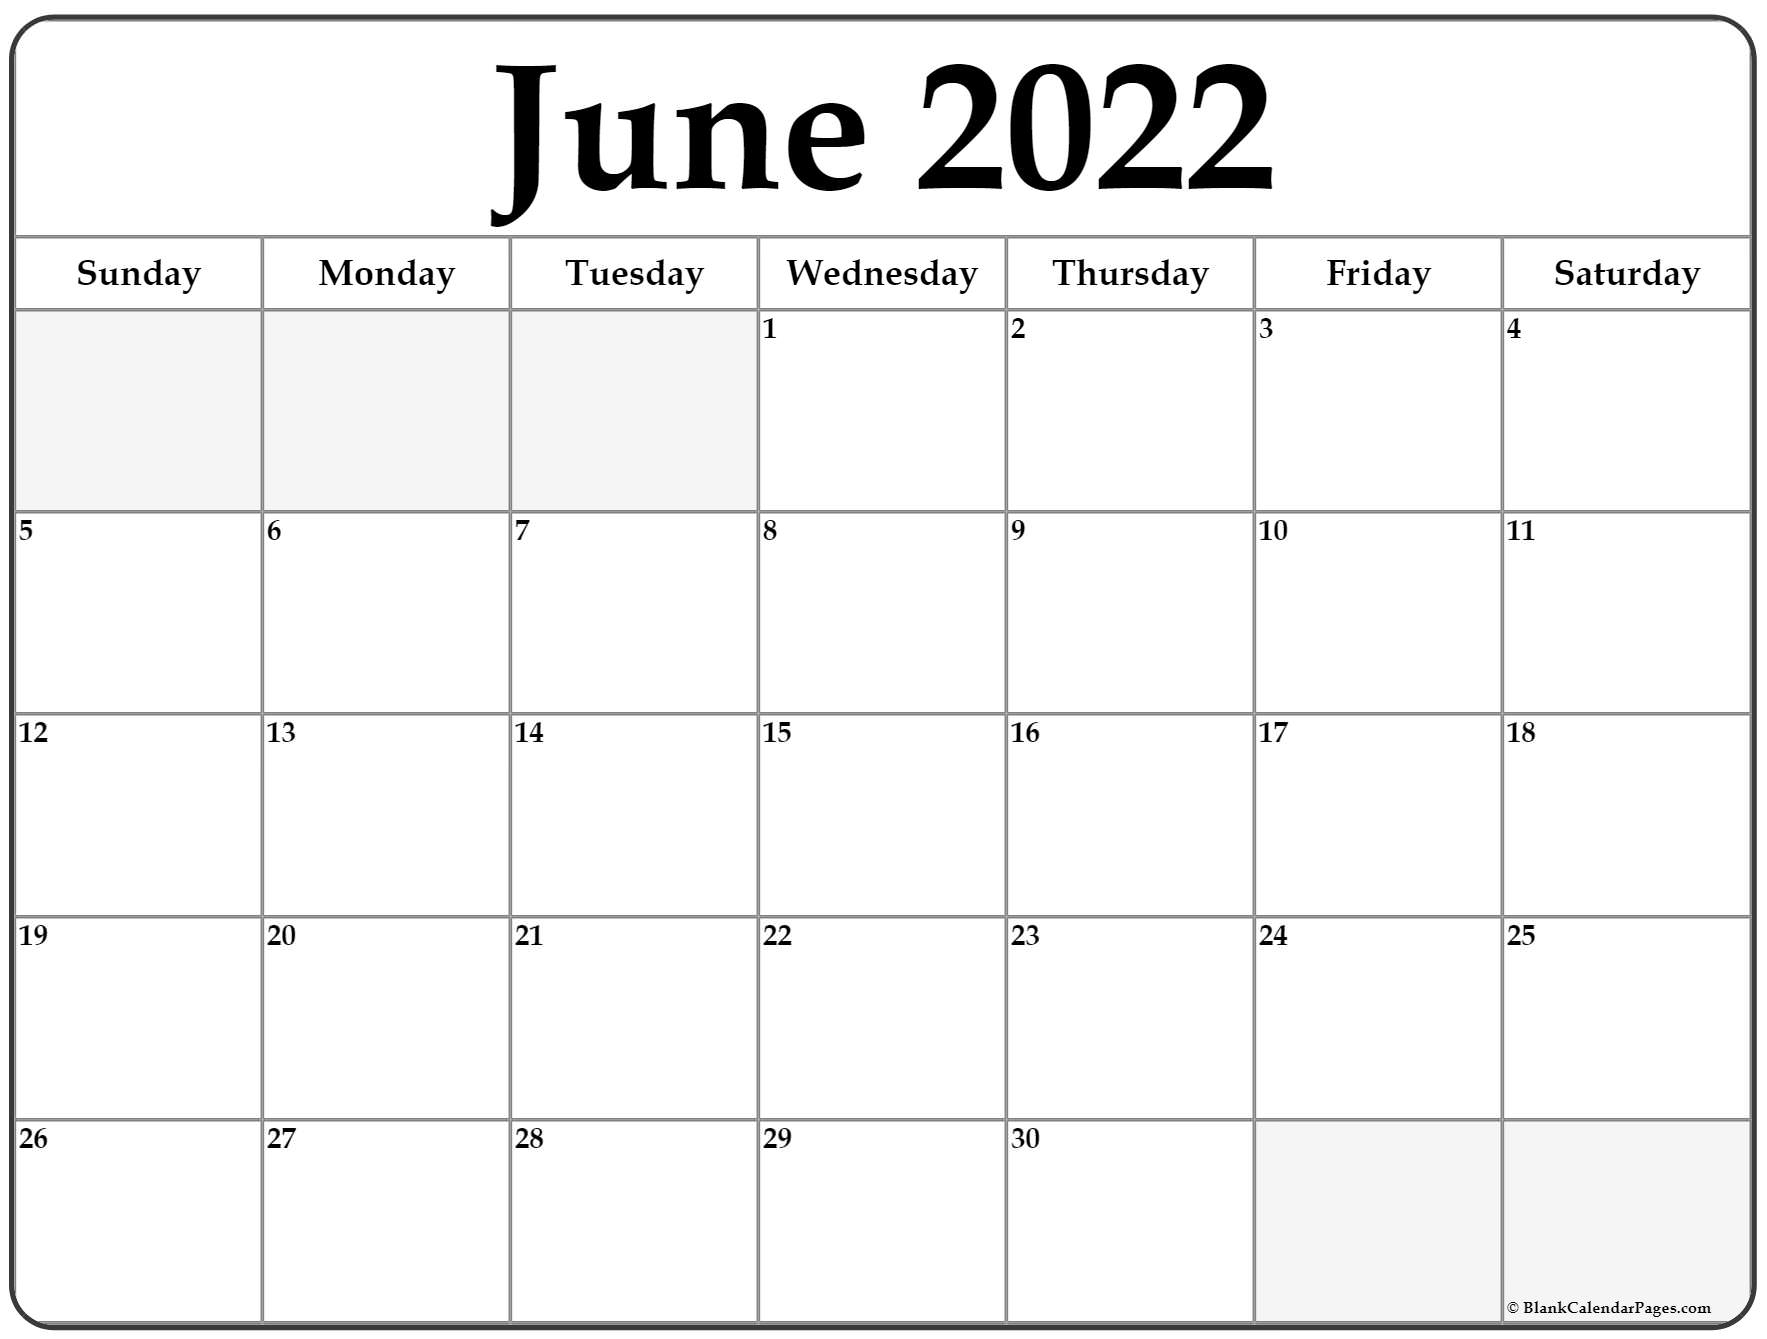 June 2022 Calendar | Free Printable Calendar Templates